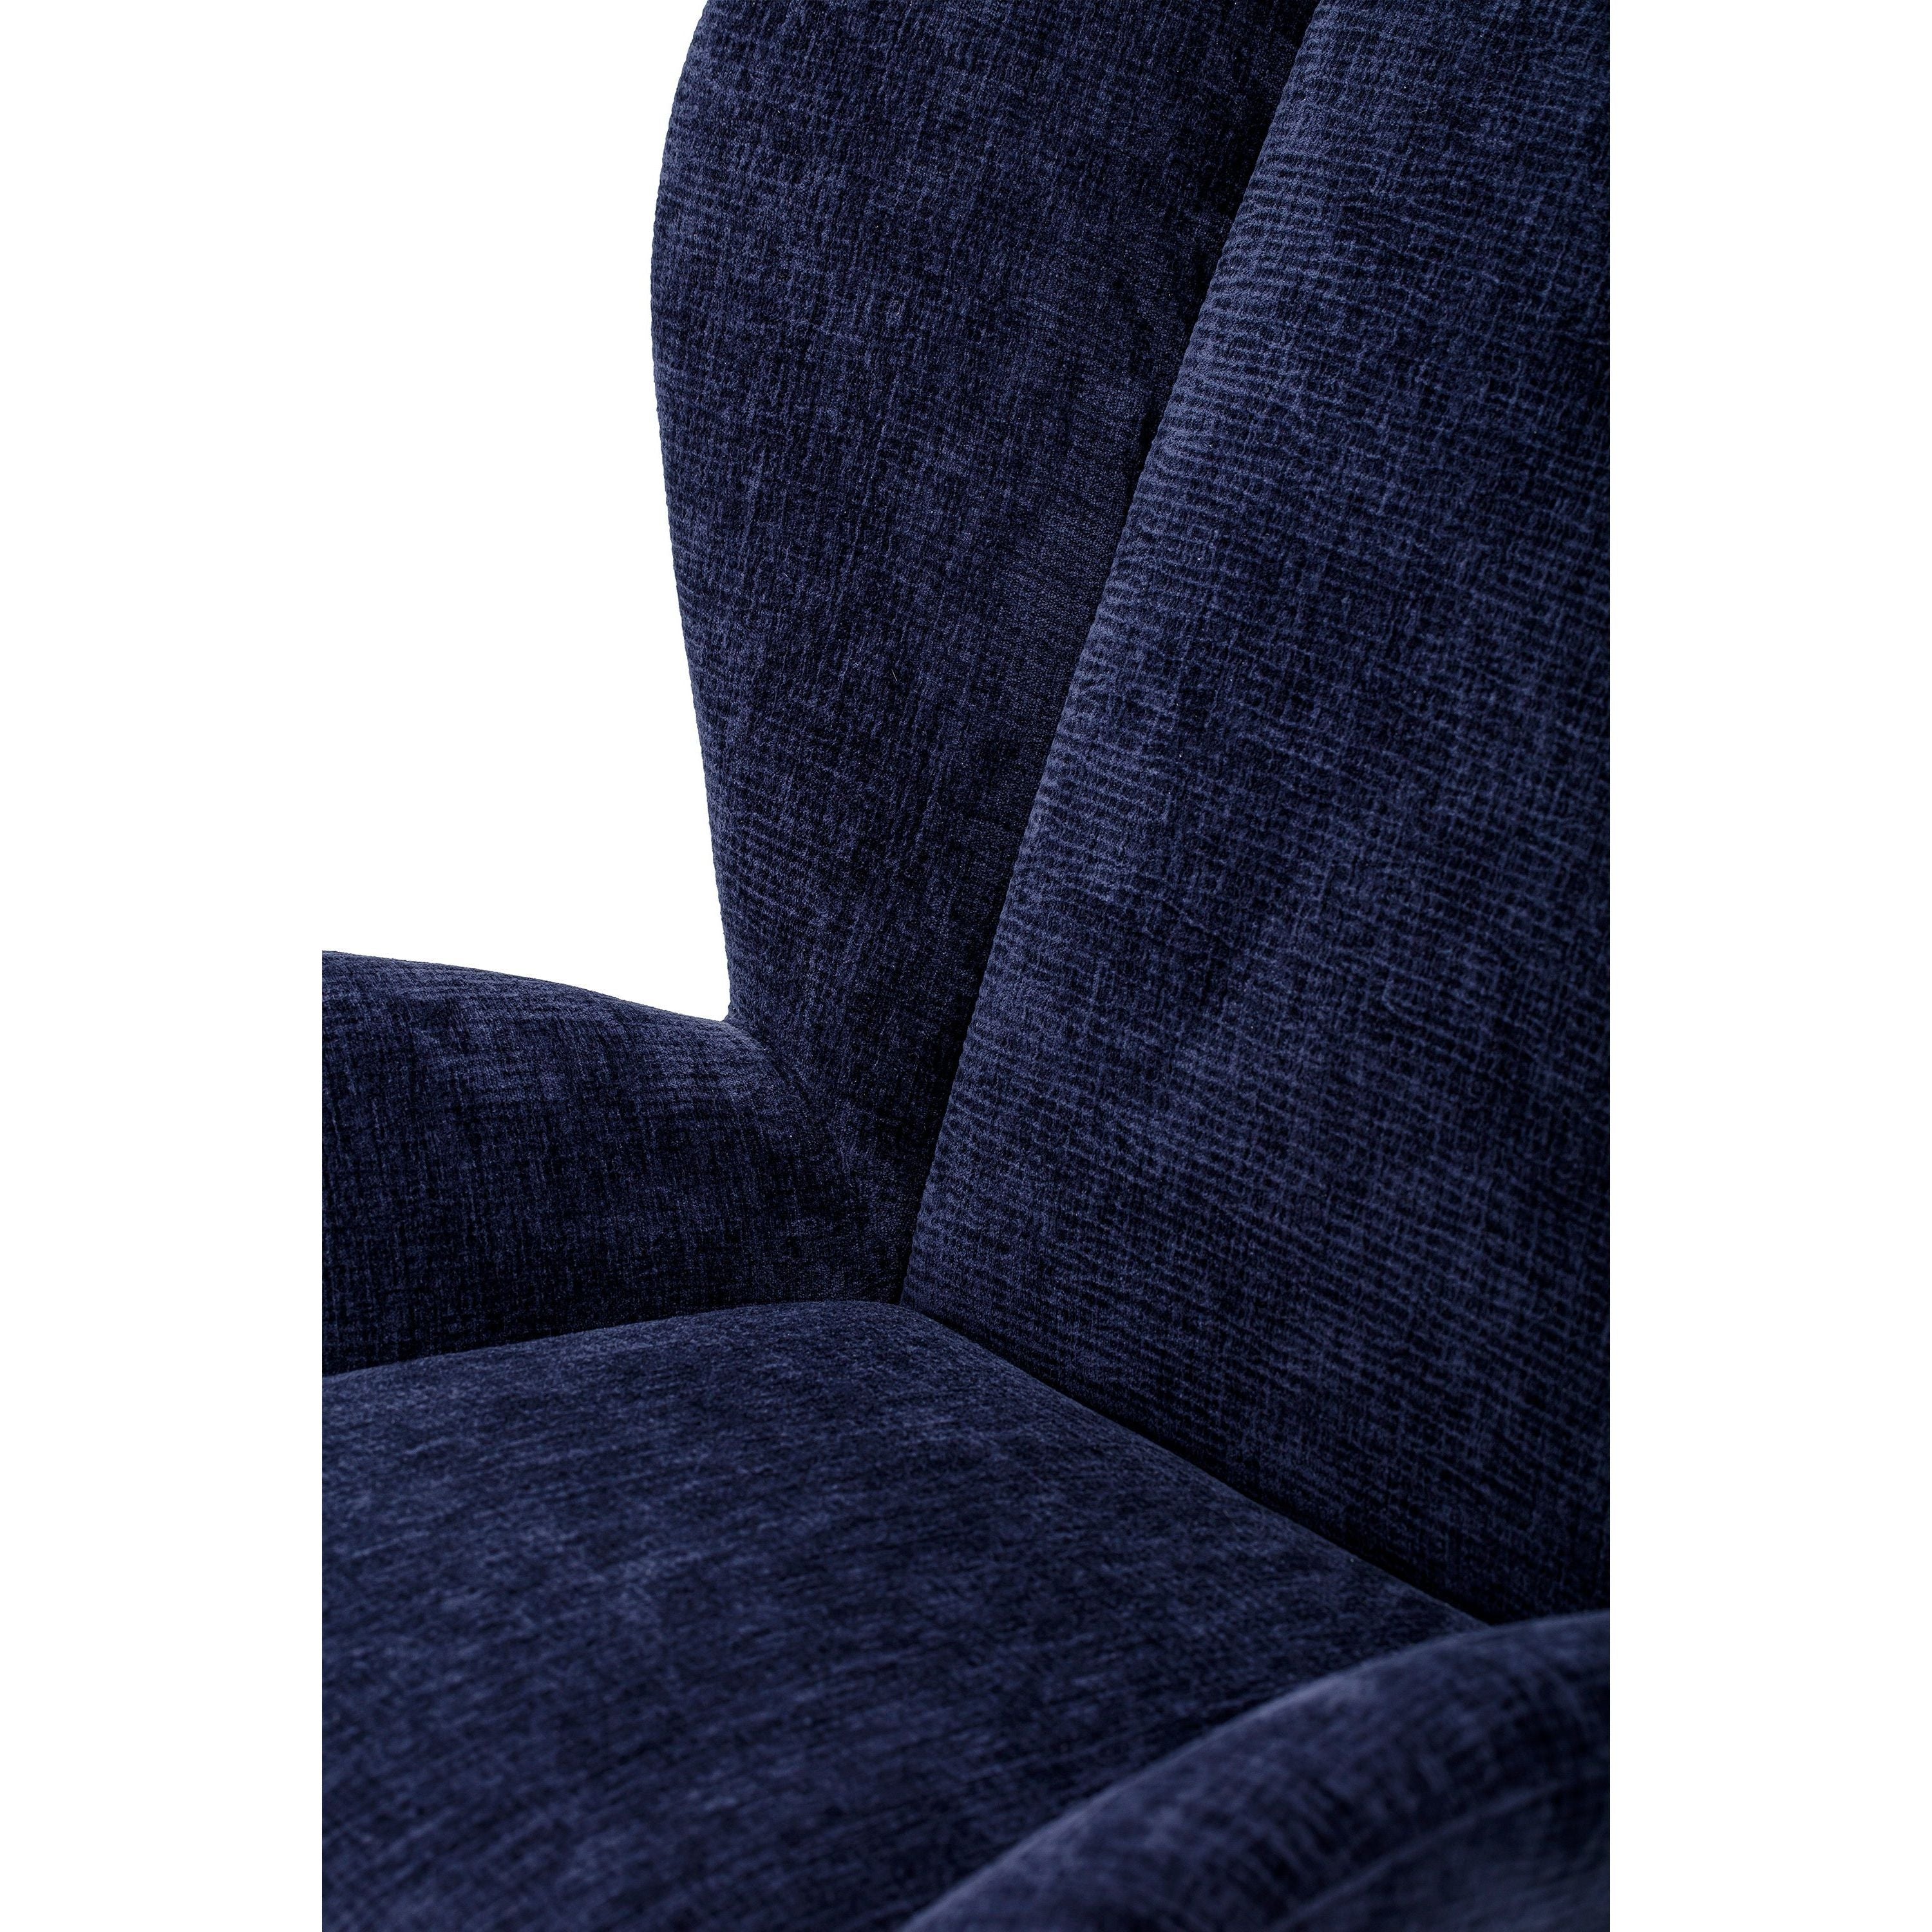 "EAVE" fotelis, mėlyna spalva, poliesteris